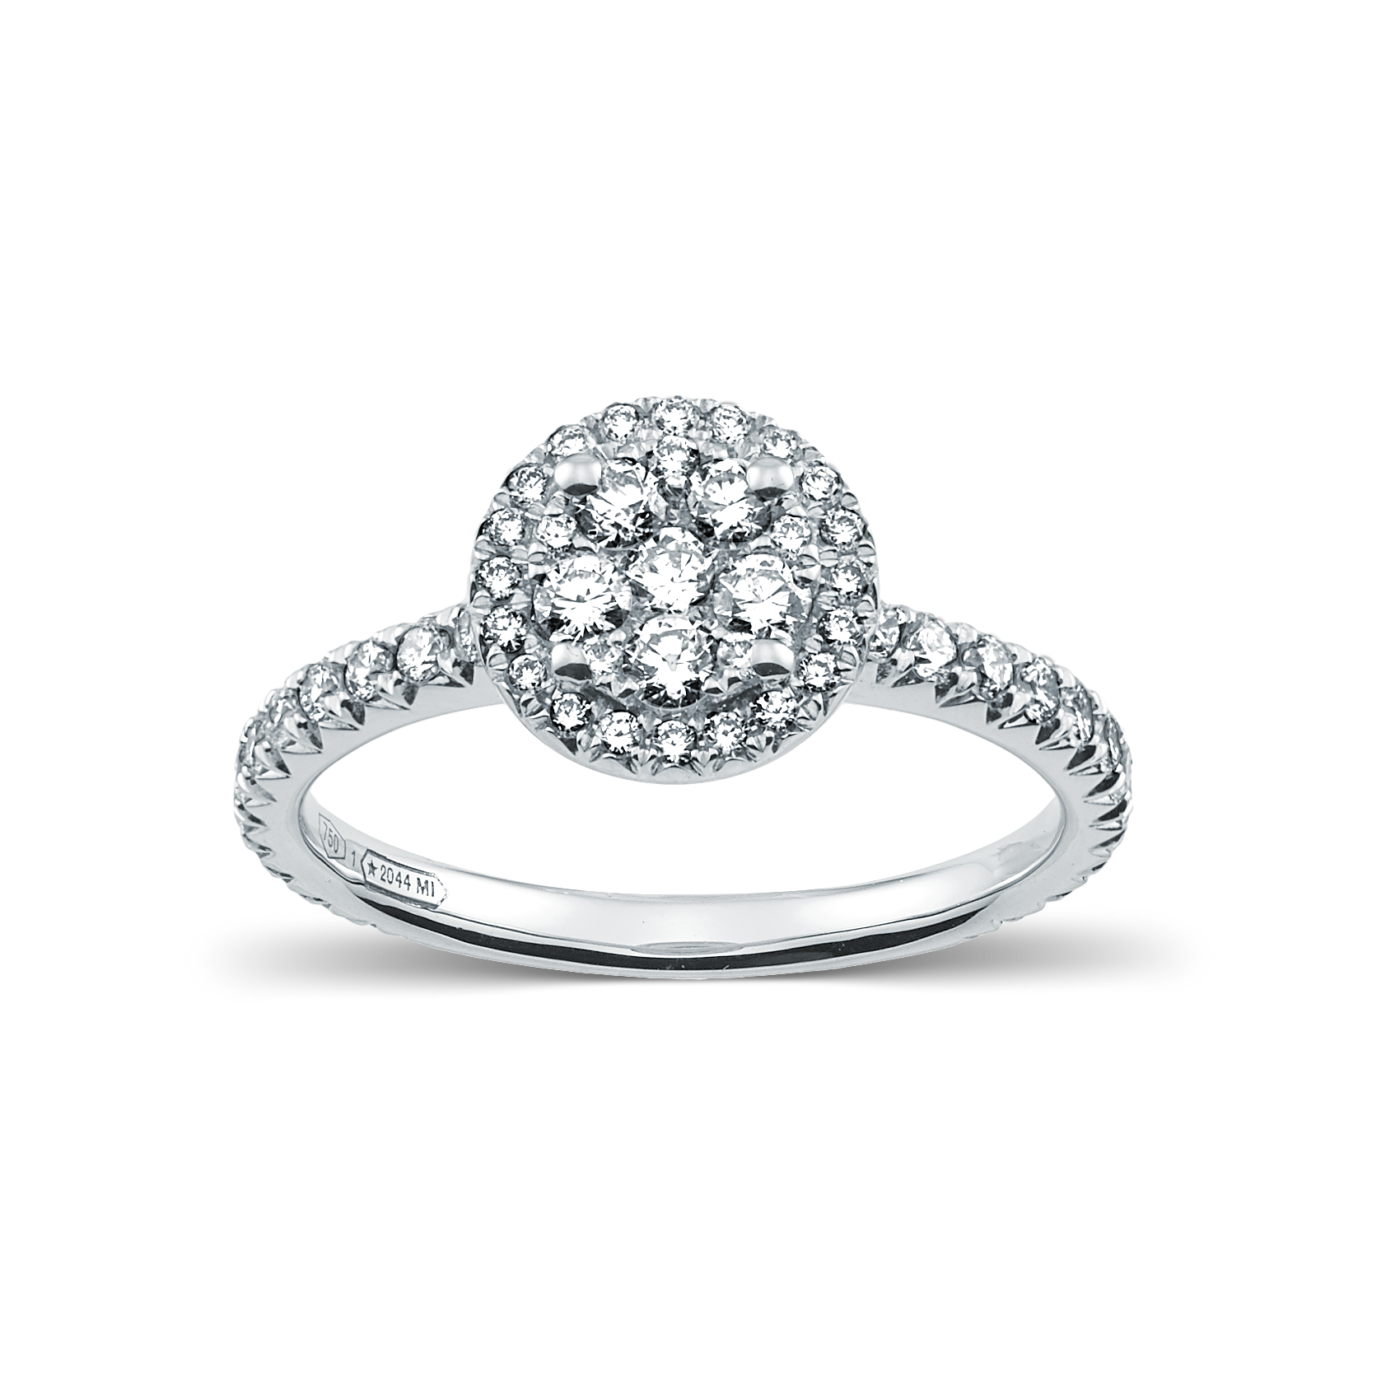 Devous Ring with Diamonds